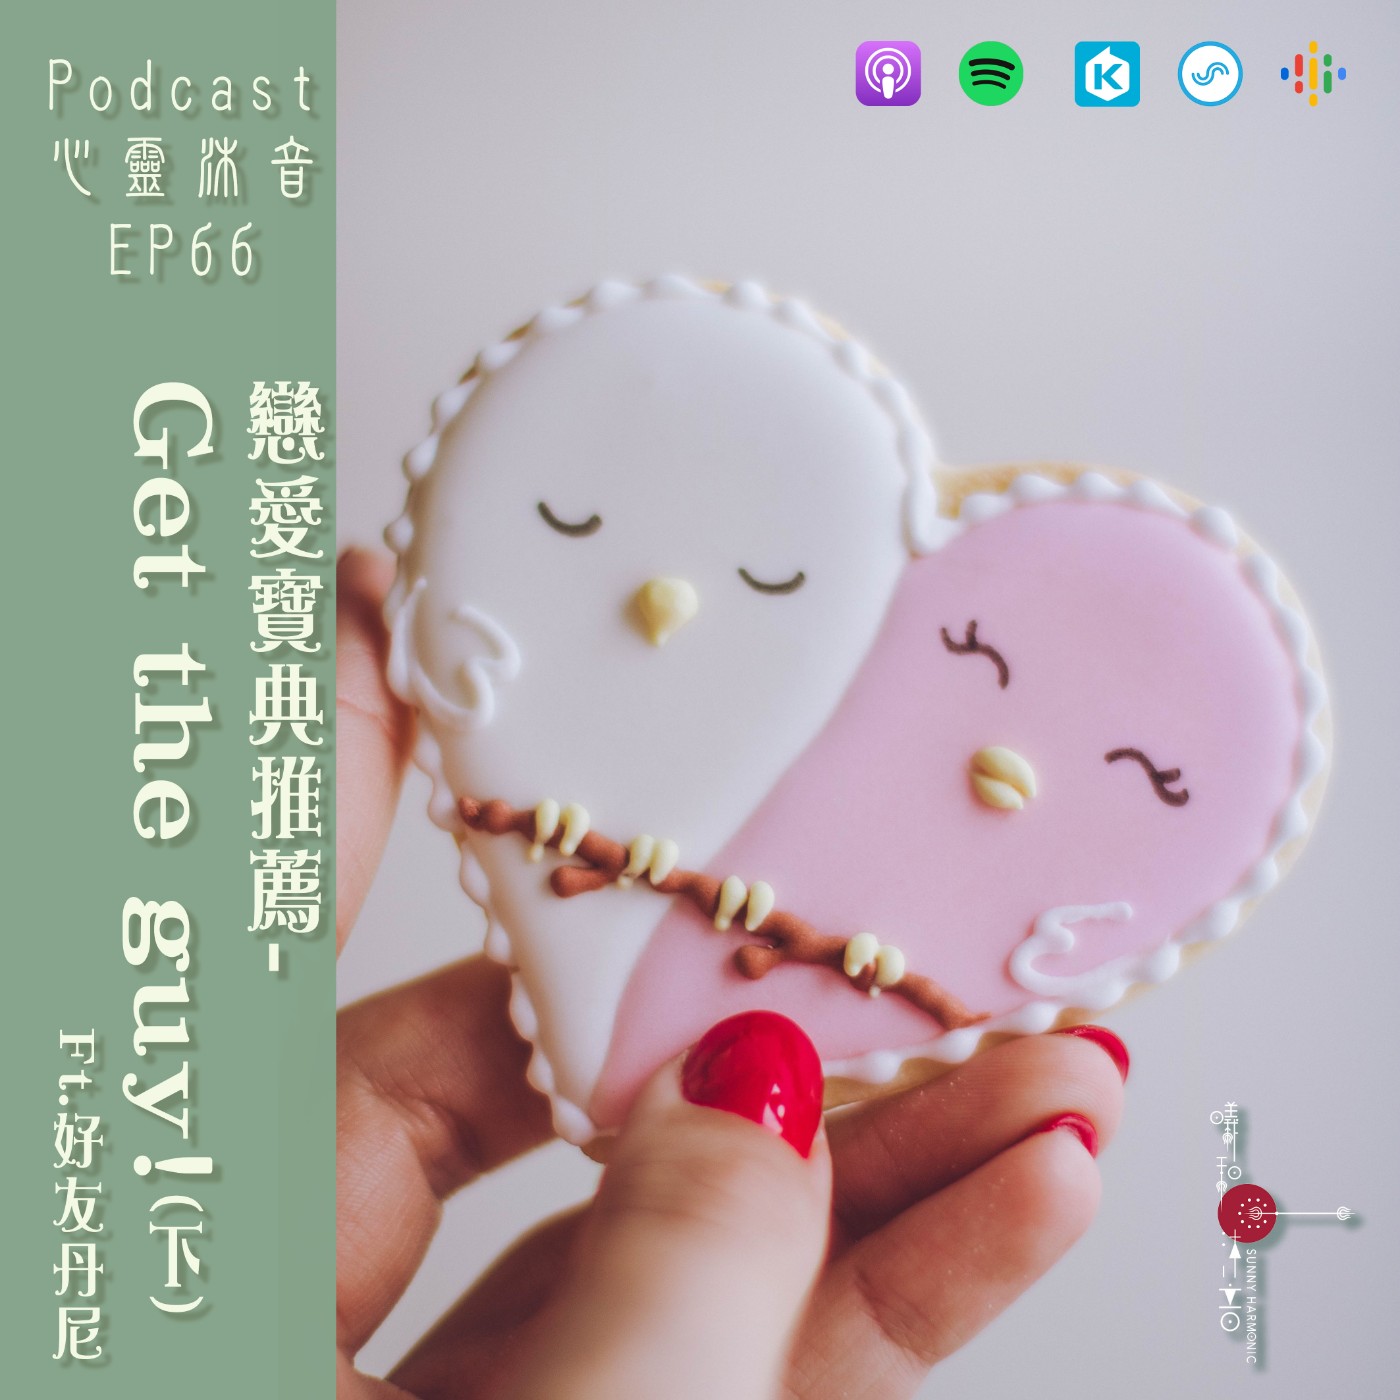 🎆 EP66  🌺【戀愛寶典-Get the guy!】(下) Ft. 好友丹尼